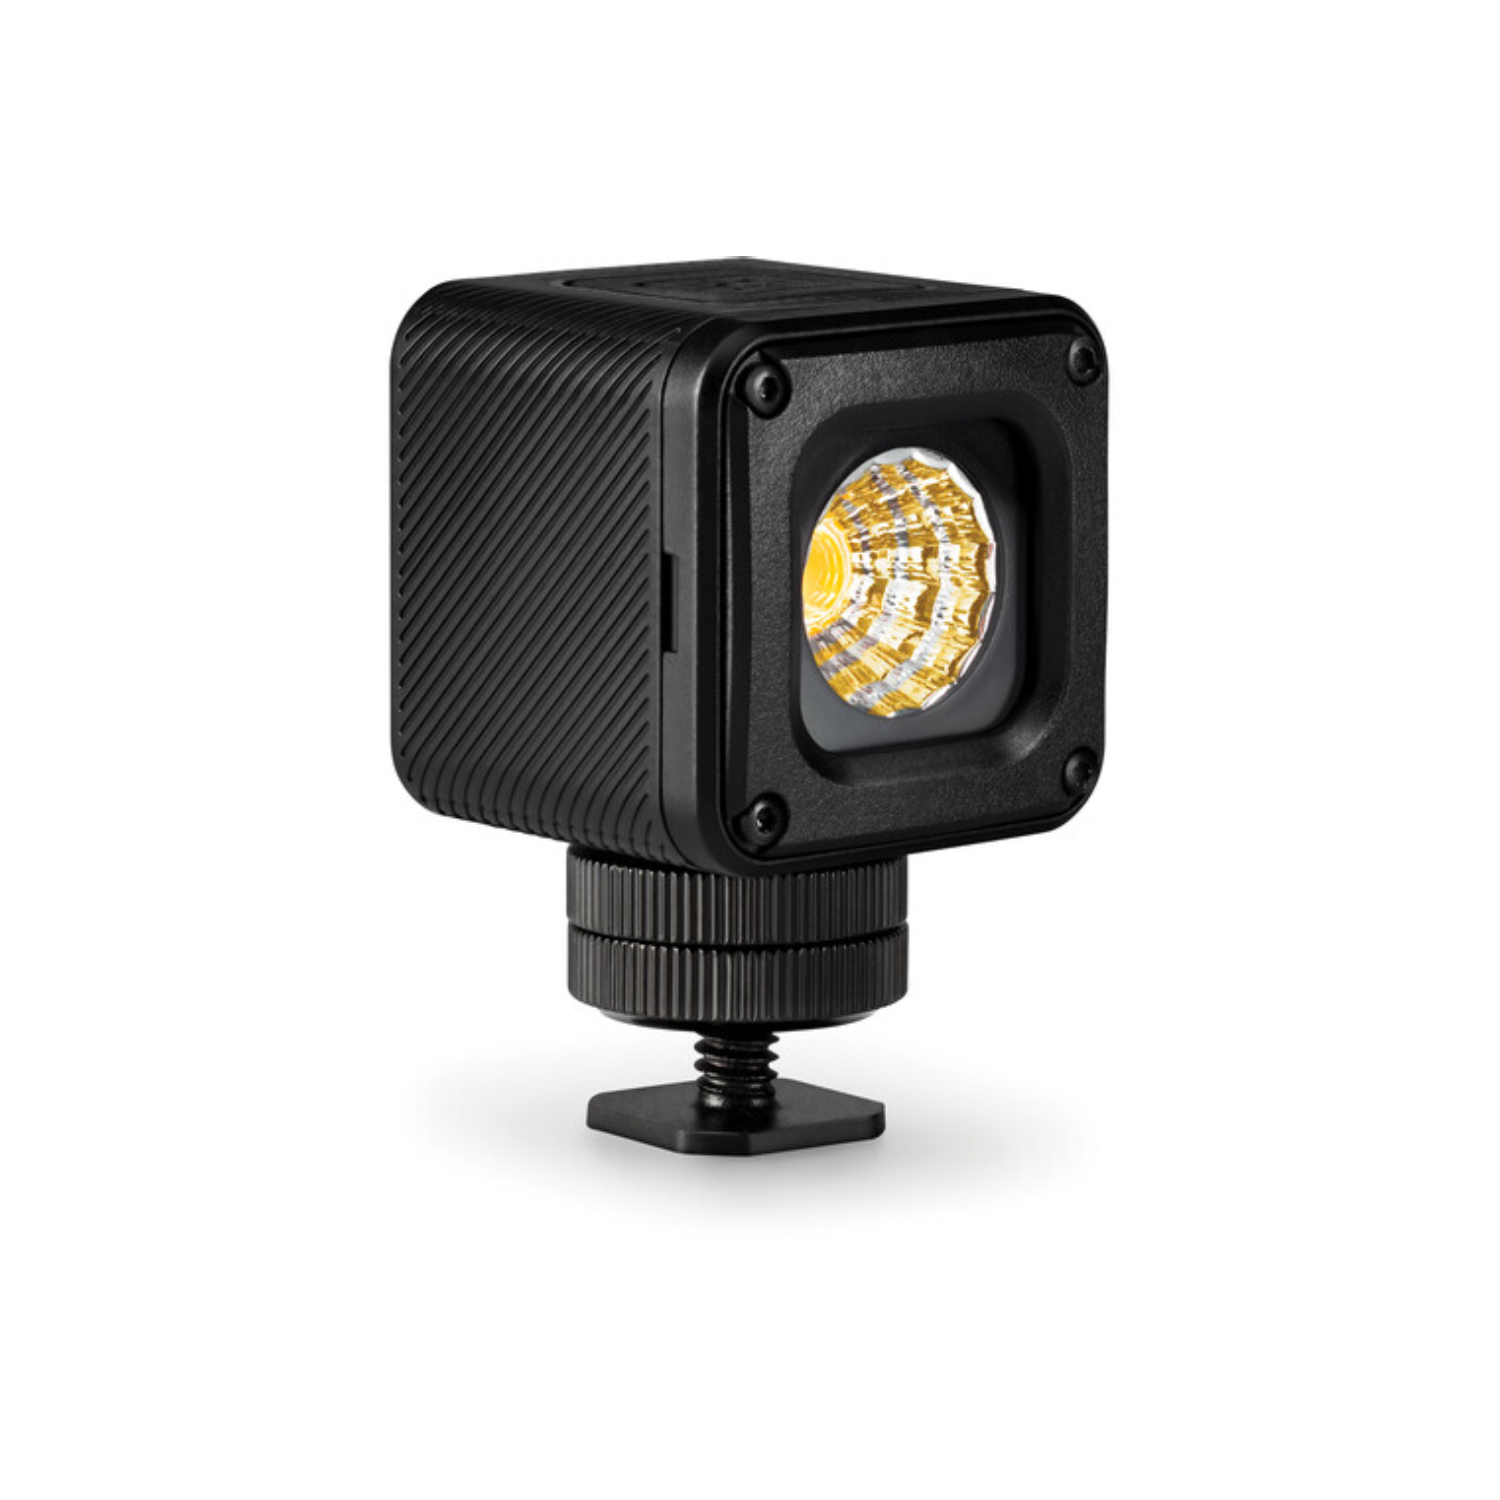 Rode Vlogger Kit - VideoMic Me-L, Tripod 2, Smart Grip, LED Light & Accessories - for iOS Devices